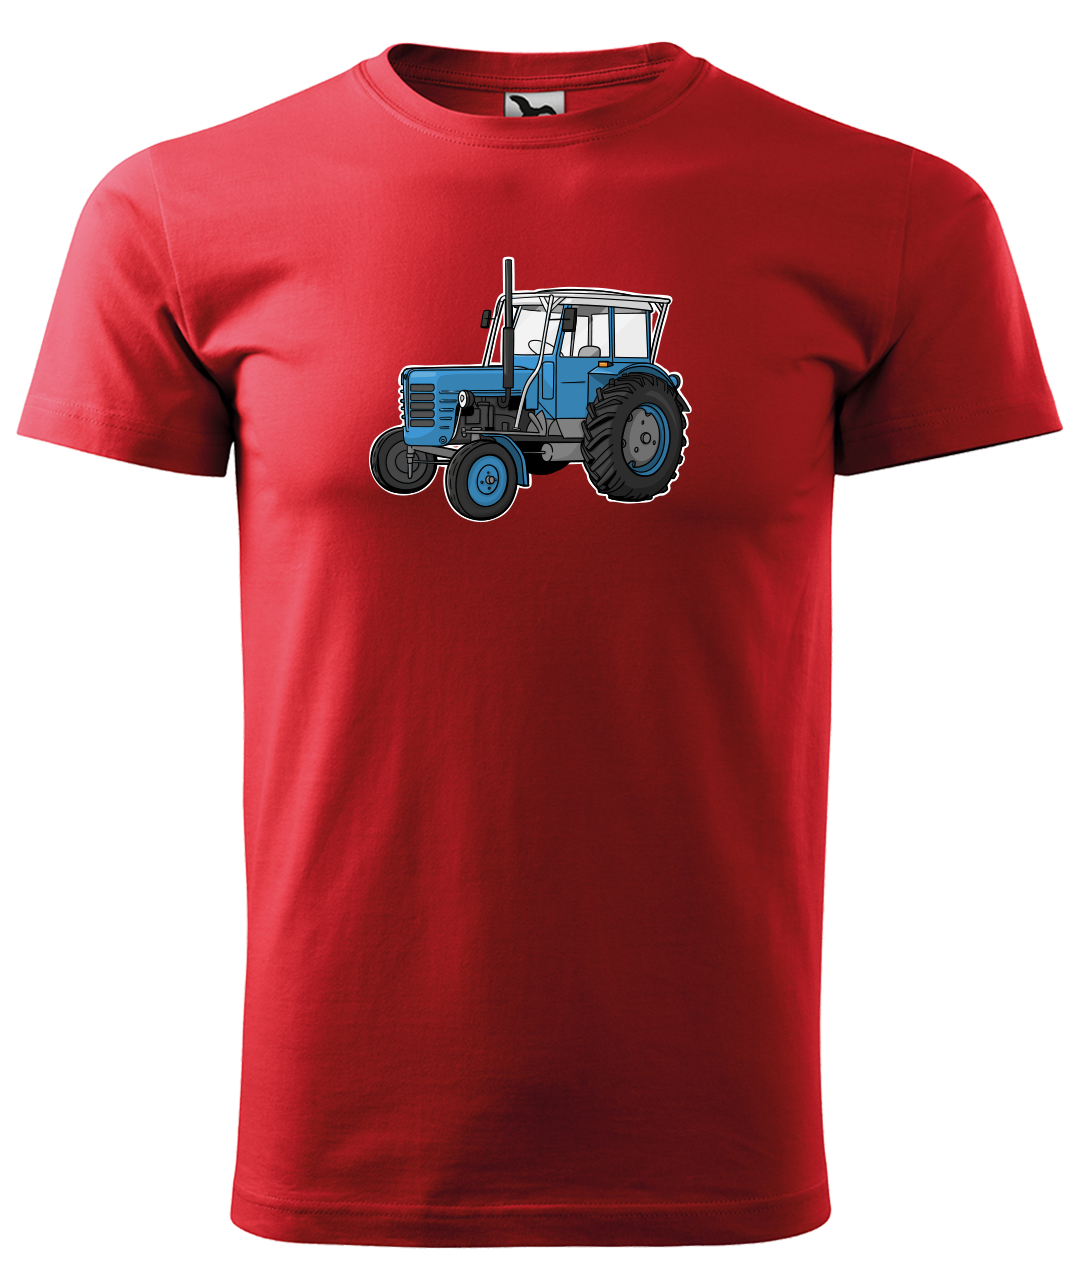 Dětské tričko s traktorem - Starý traktor Velikost: 4 roky / 110 cm, Barva: Červená (07)